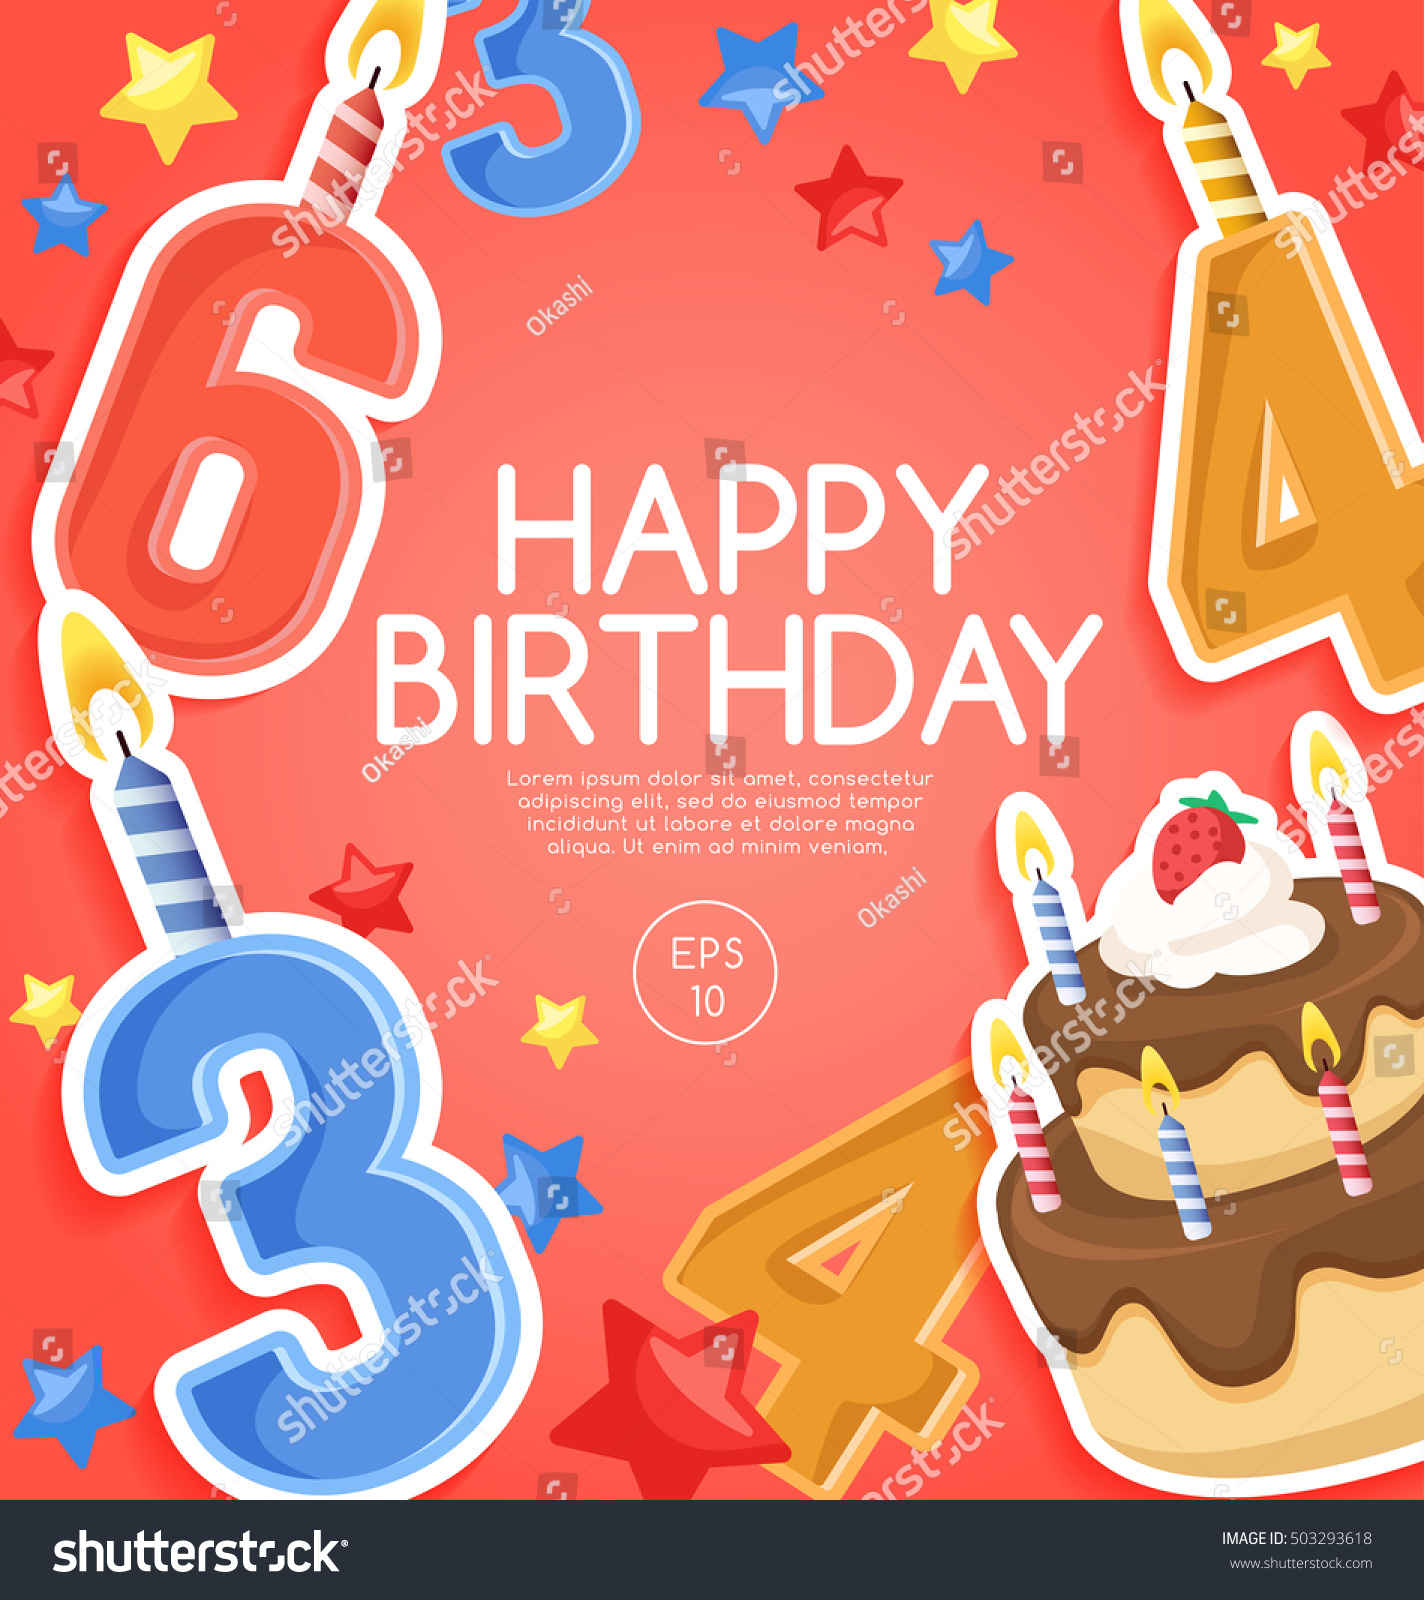 Happy Birthday Elements Vector Illustration Stock Vector 503293618 ...